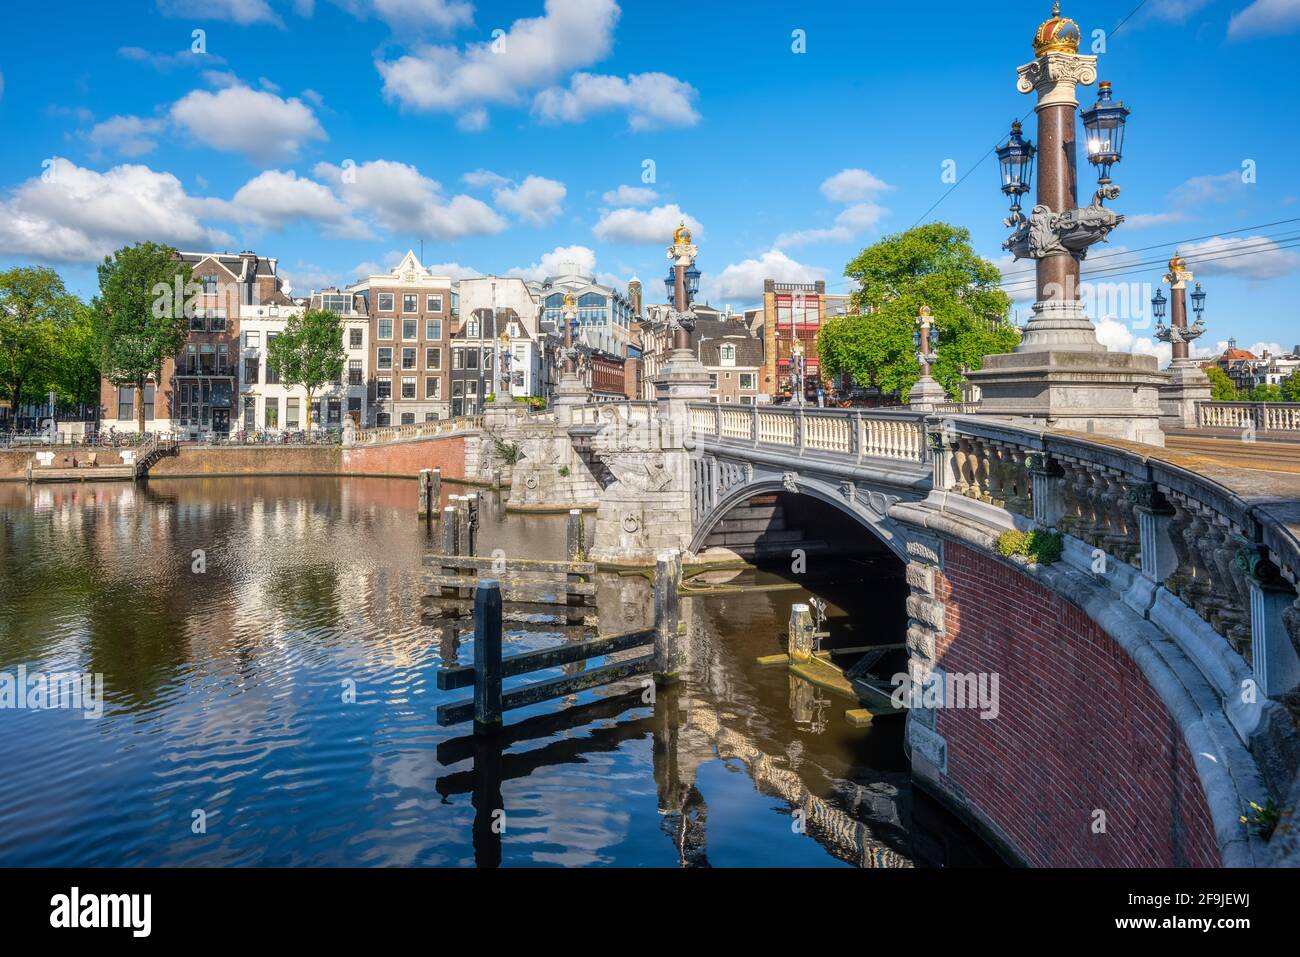 Blauwbrug, or Blue Bridge, the historical bridge over Amstel river in Amsterdam city, Netherlands Stock Photo